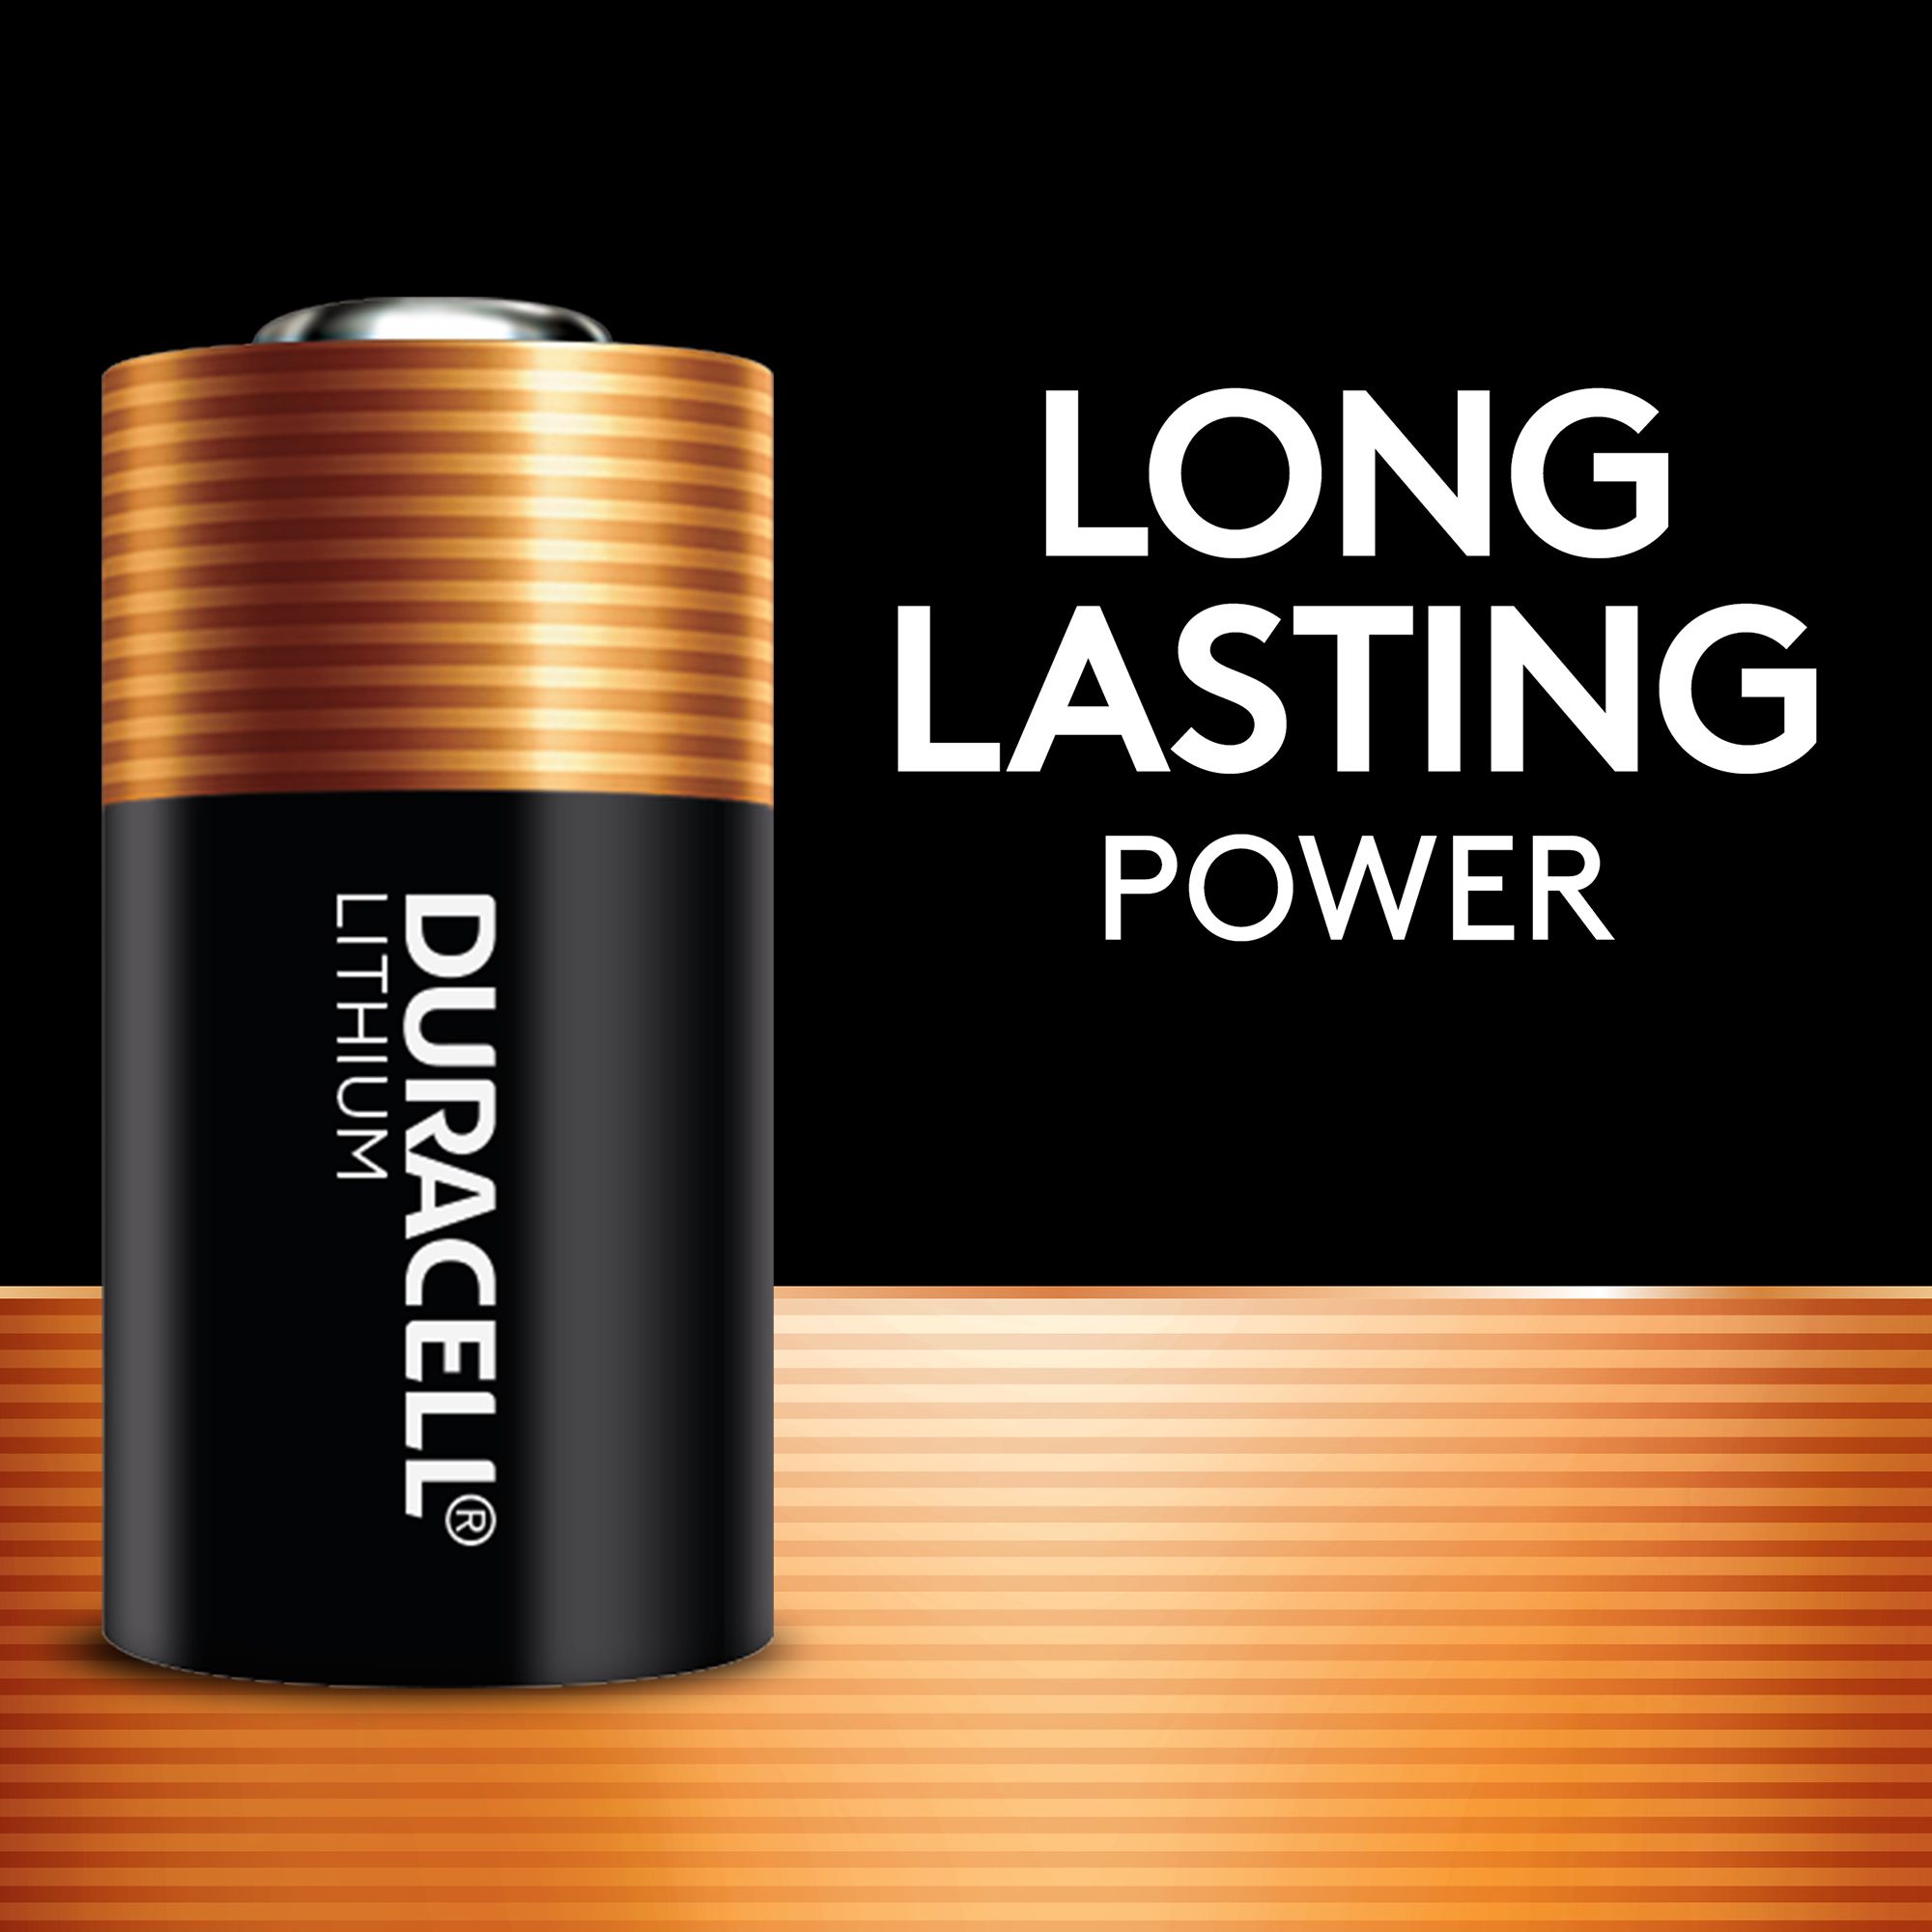 Duracell CR2 3V Lithium Batteries – 2 Pack